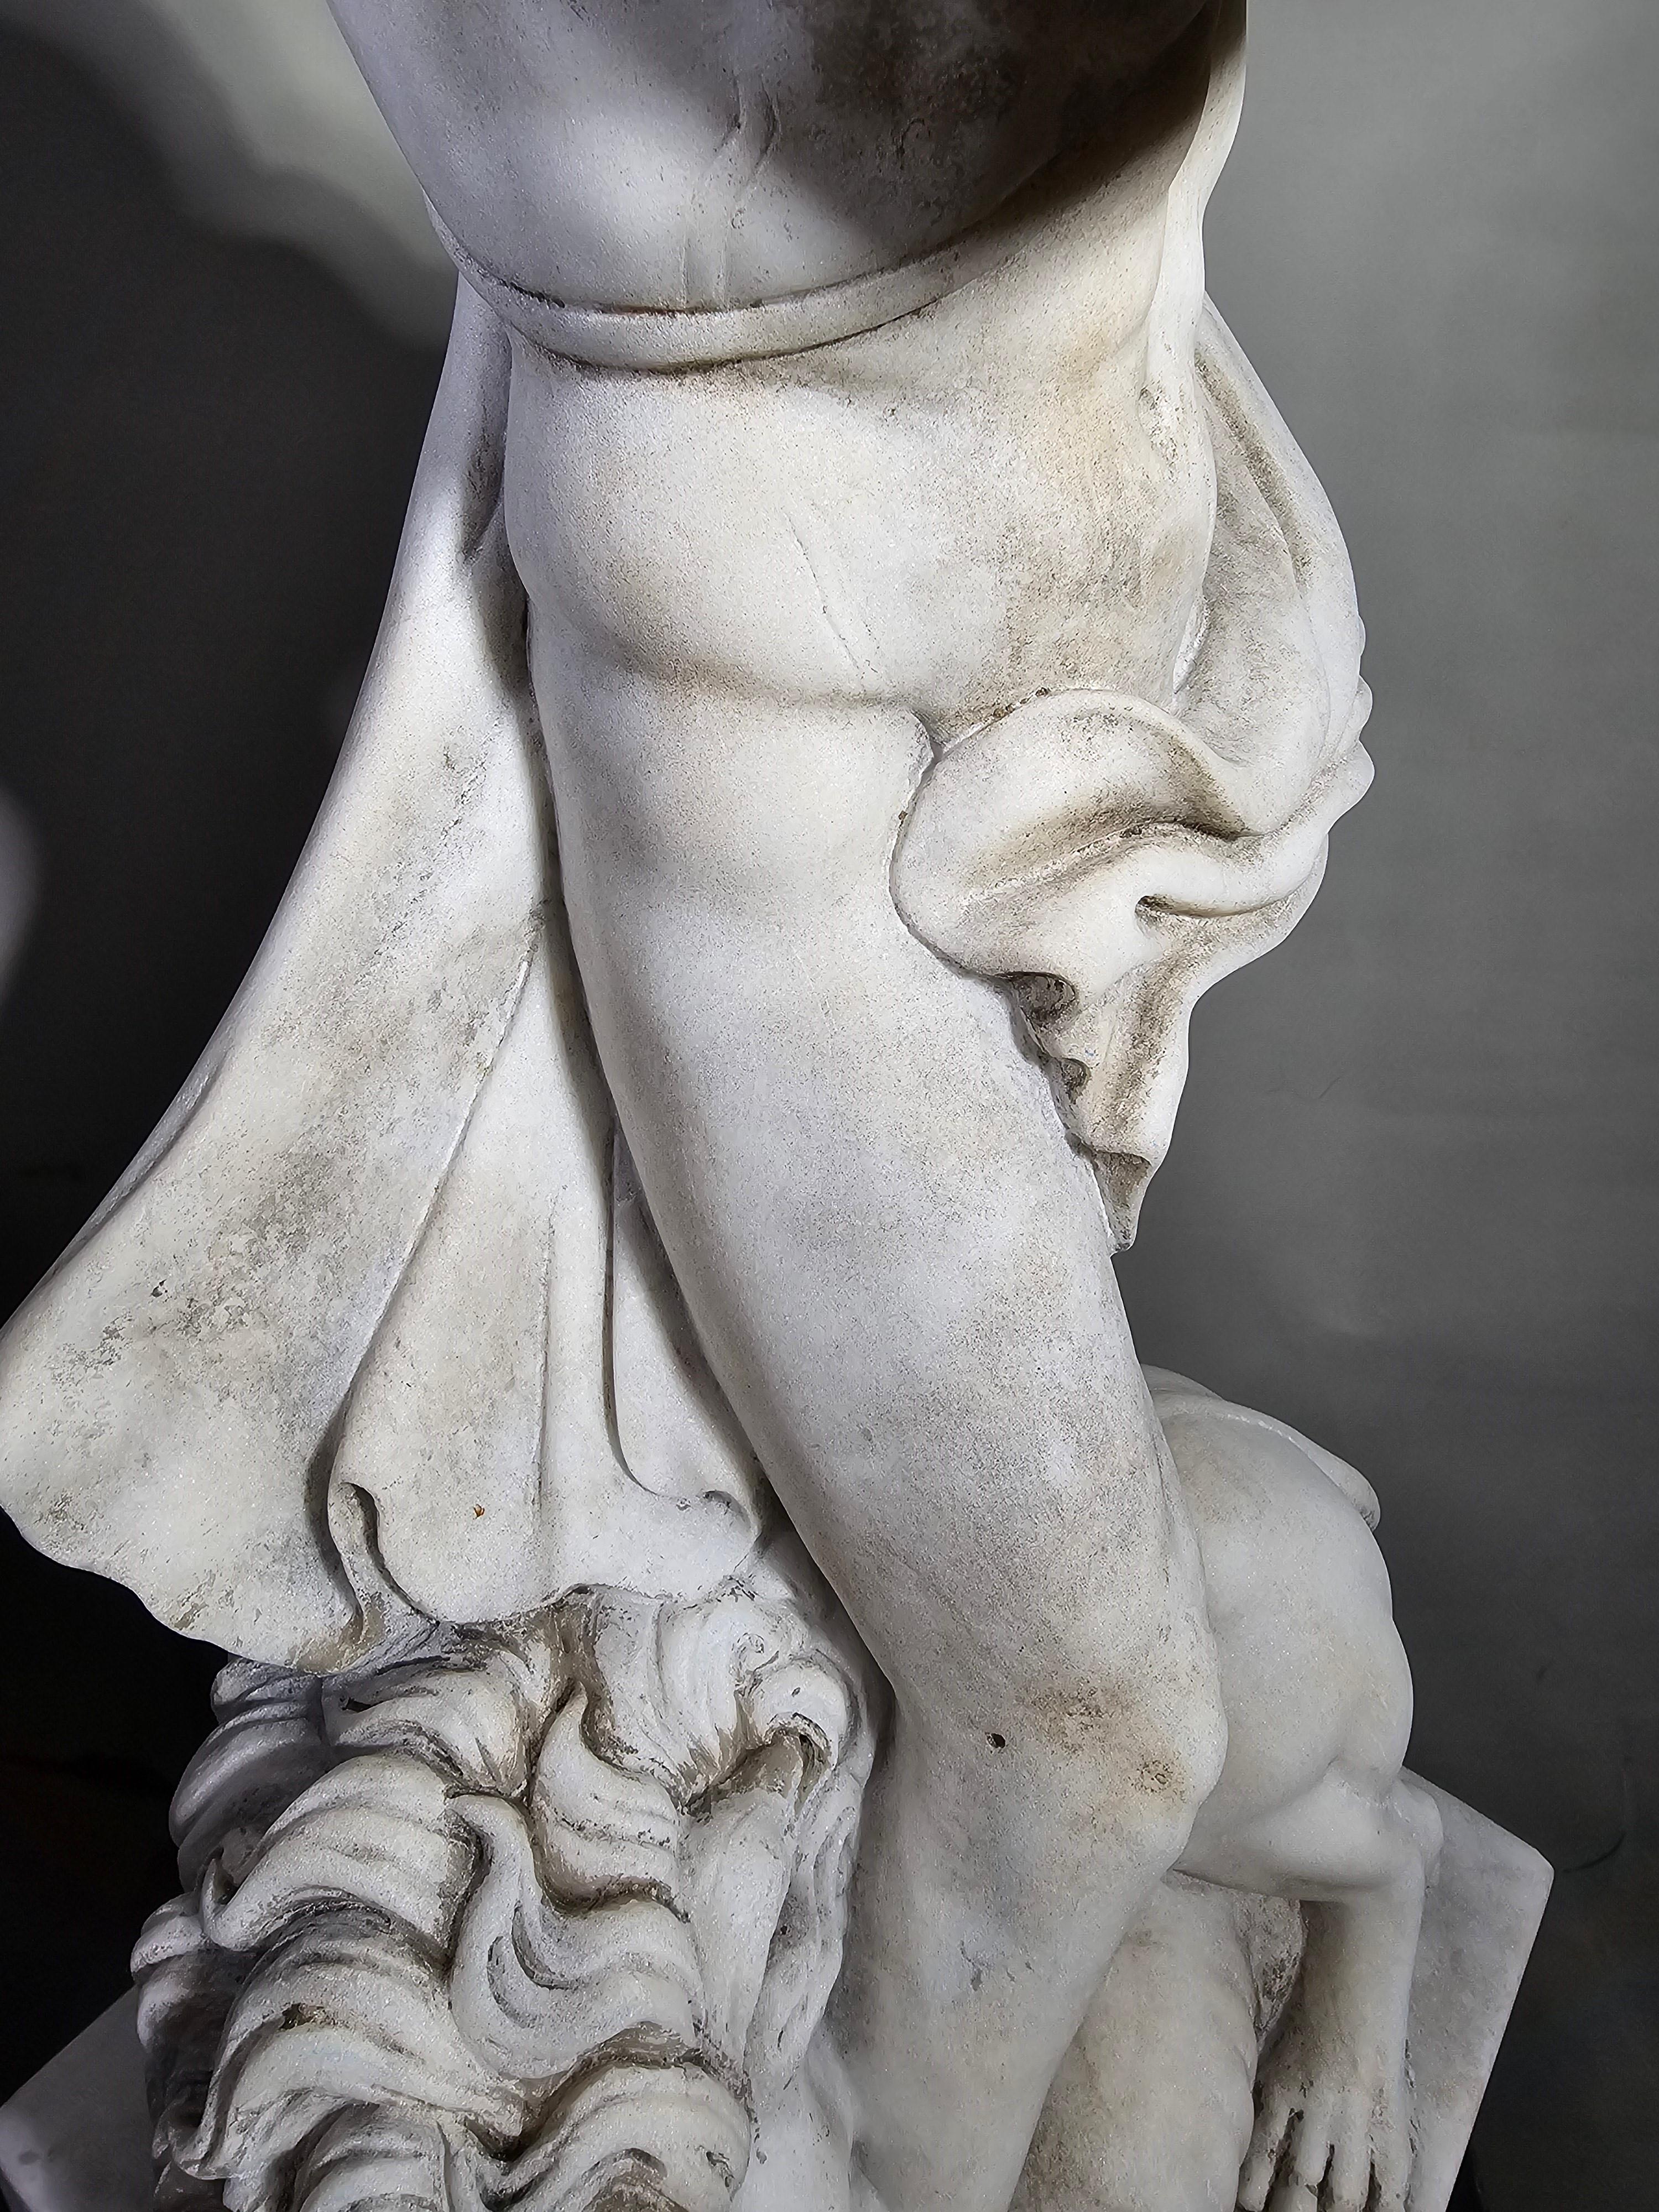 Elegant 19th Century White Carrara Marble Sculpture Depicting Hercules For Sale 5